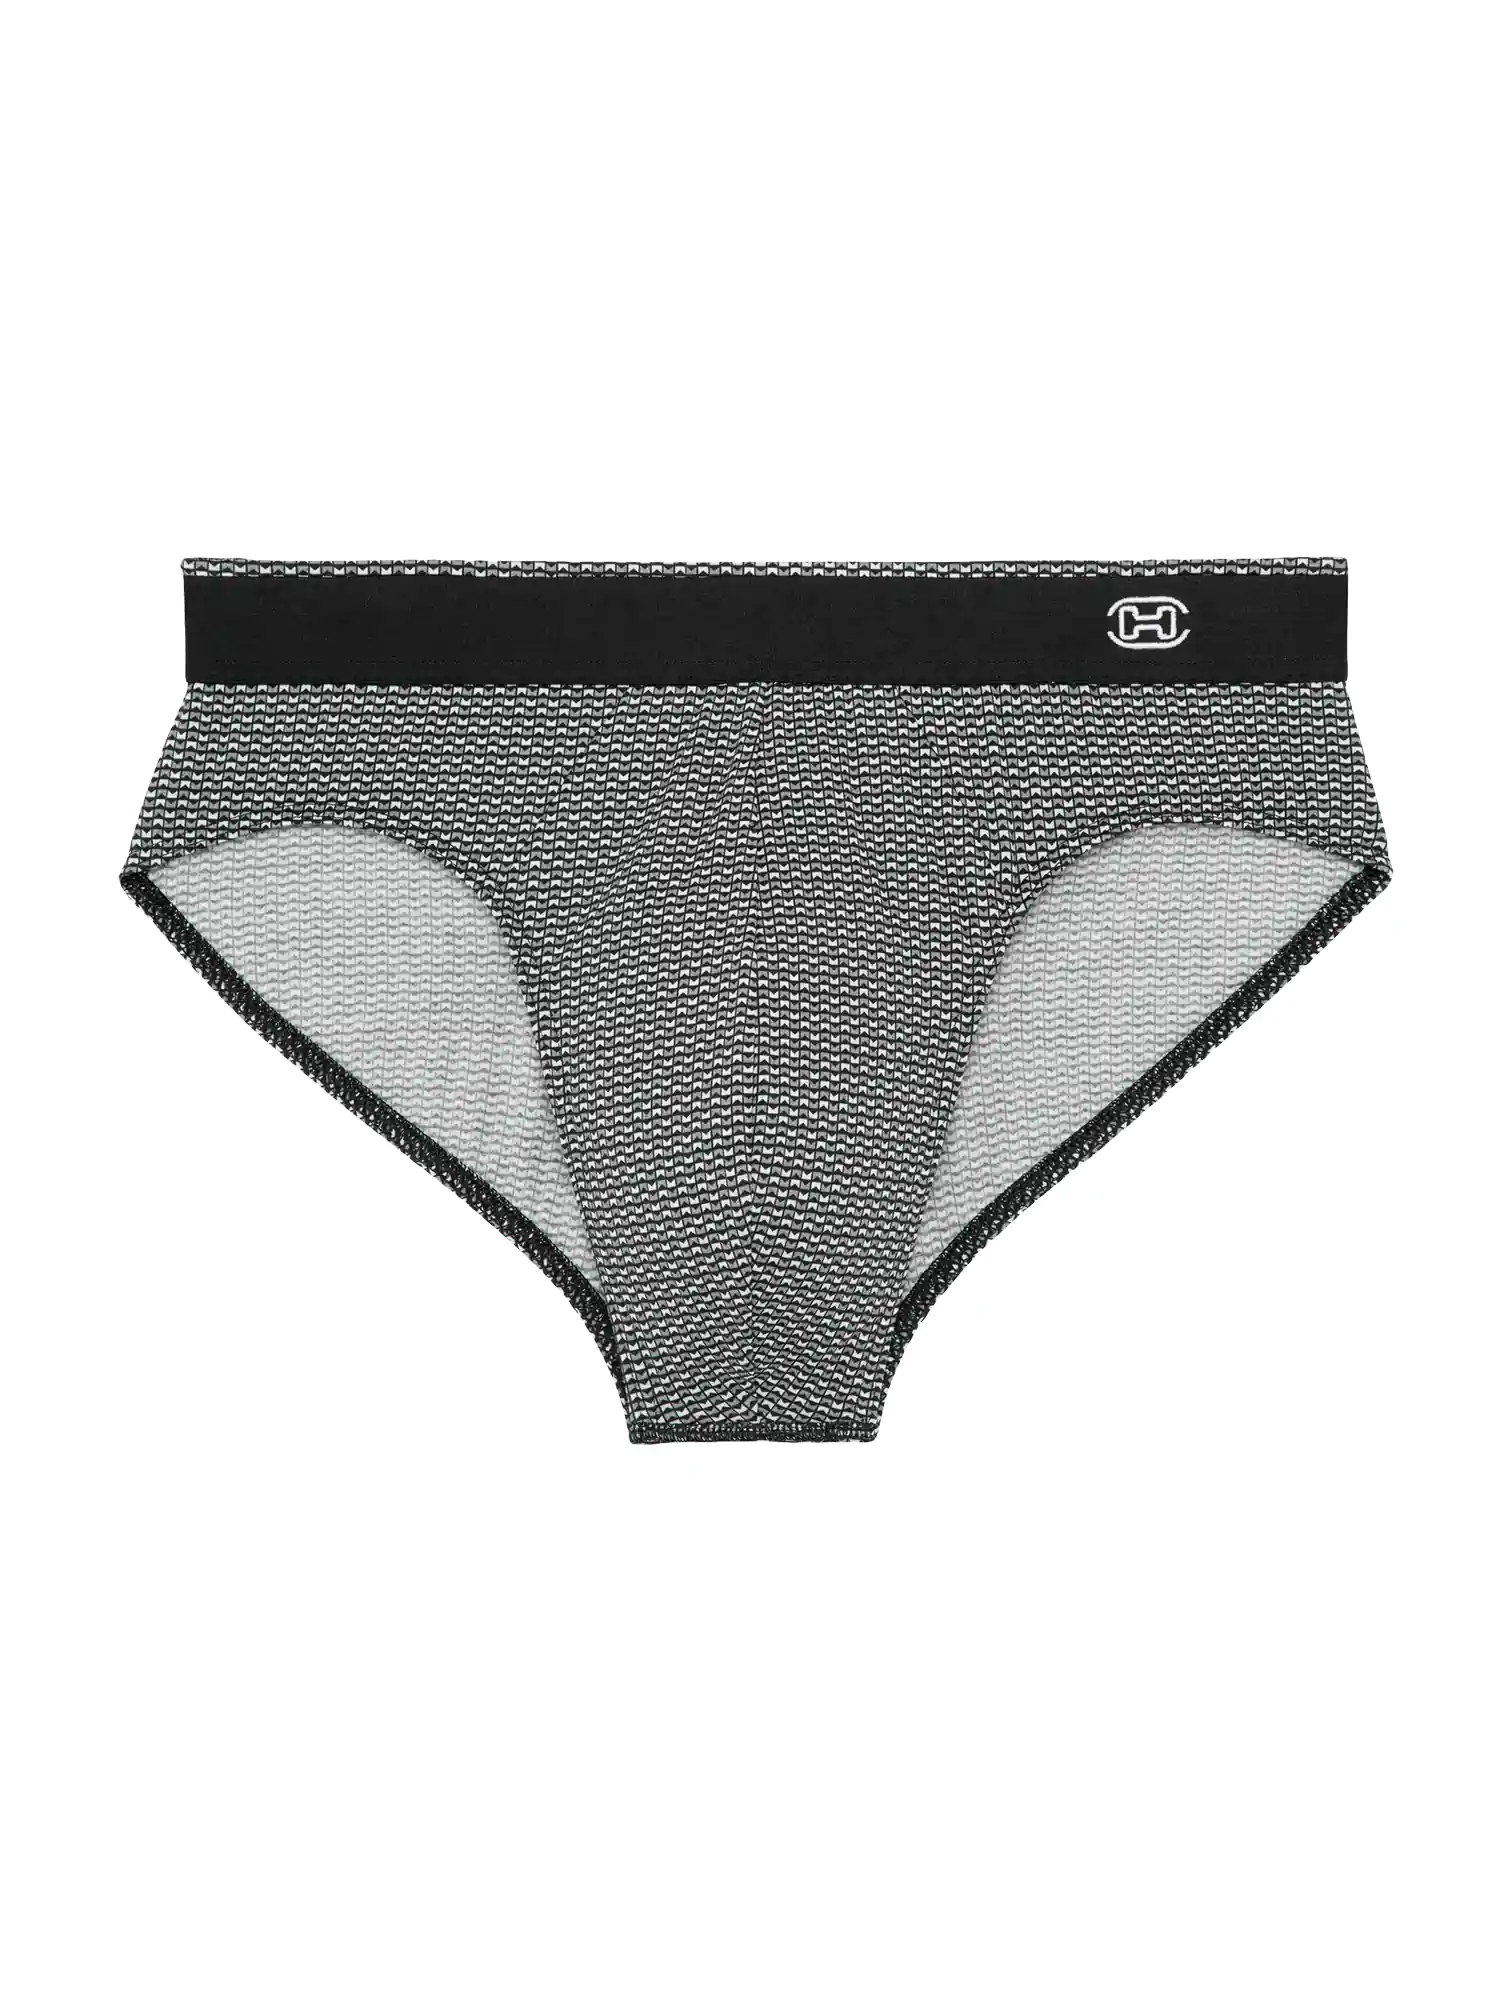 Style Brief – HOM Elysee HO1 Mini Brief – Underwear News Briefs